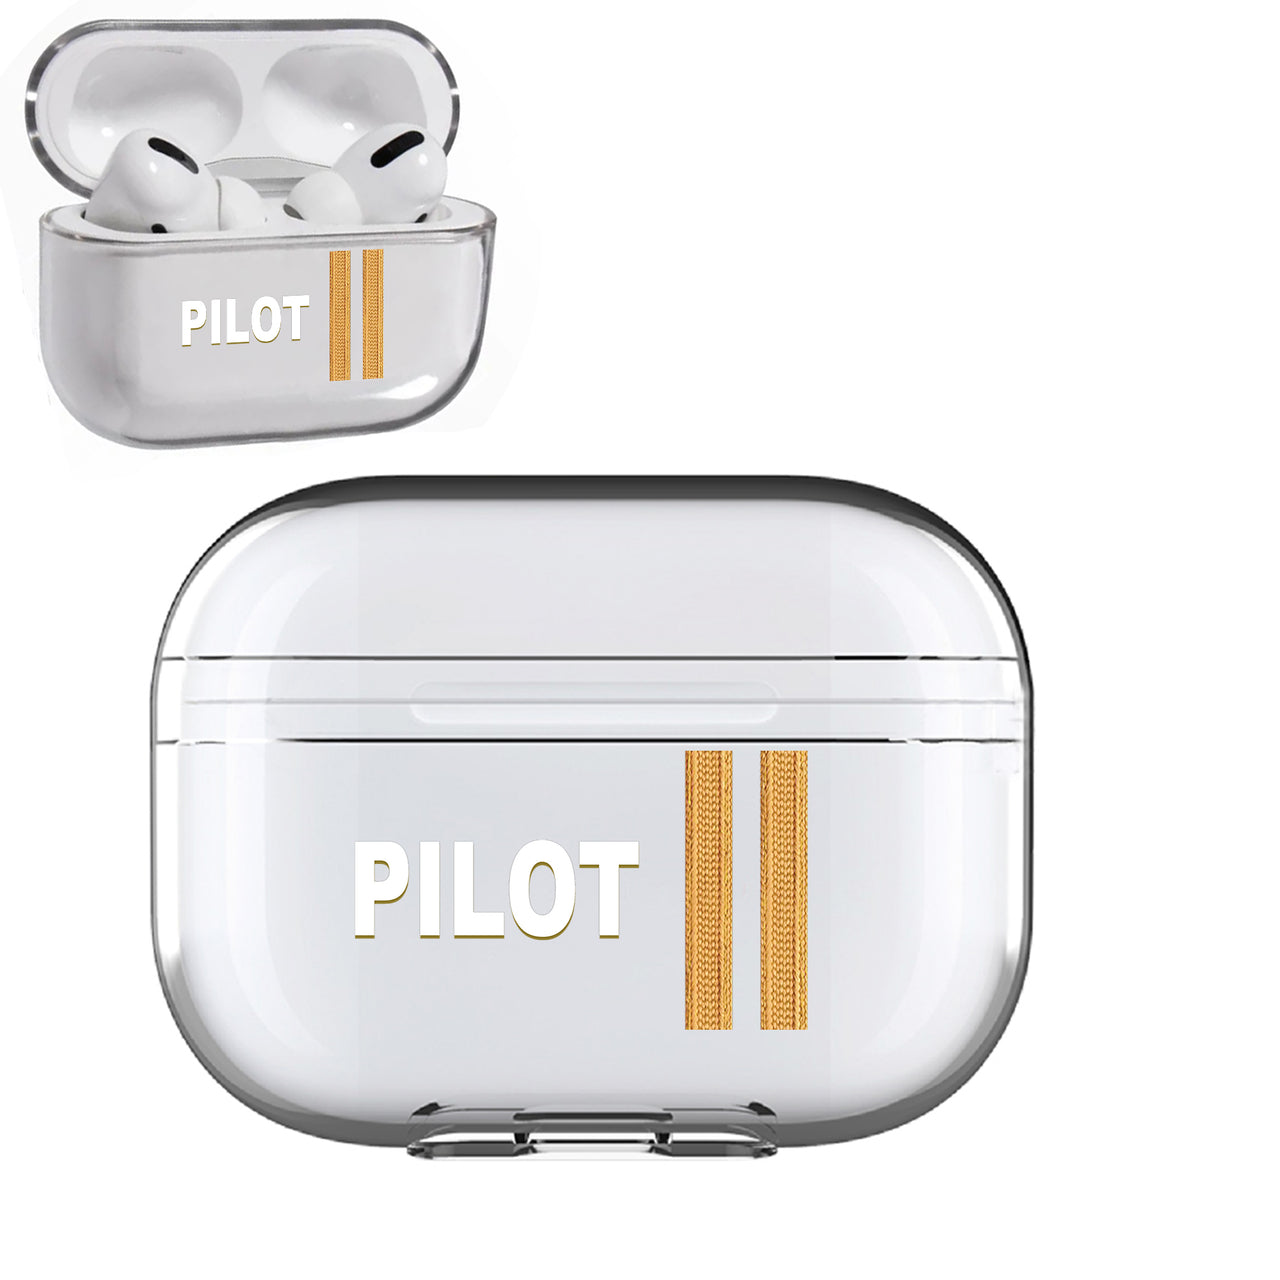 PILOT & Pilot Epaulettes (4,3,2 Lines) Designed Transparent Earphone AirPods "Pro" Cases